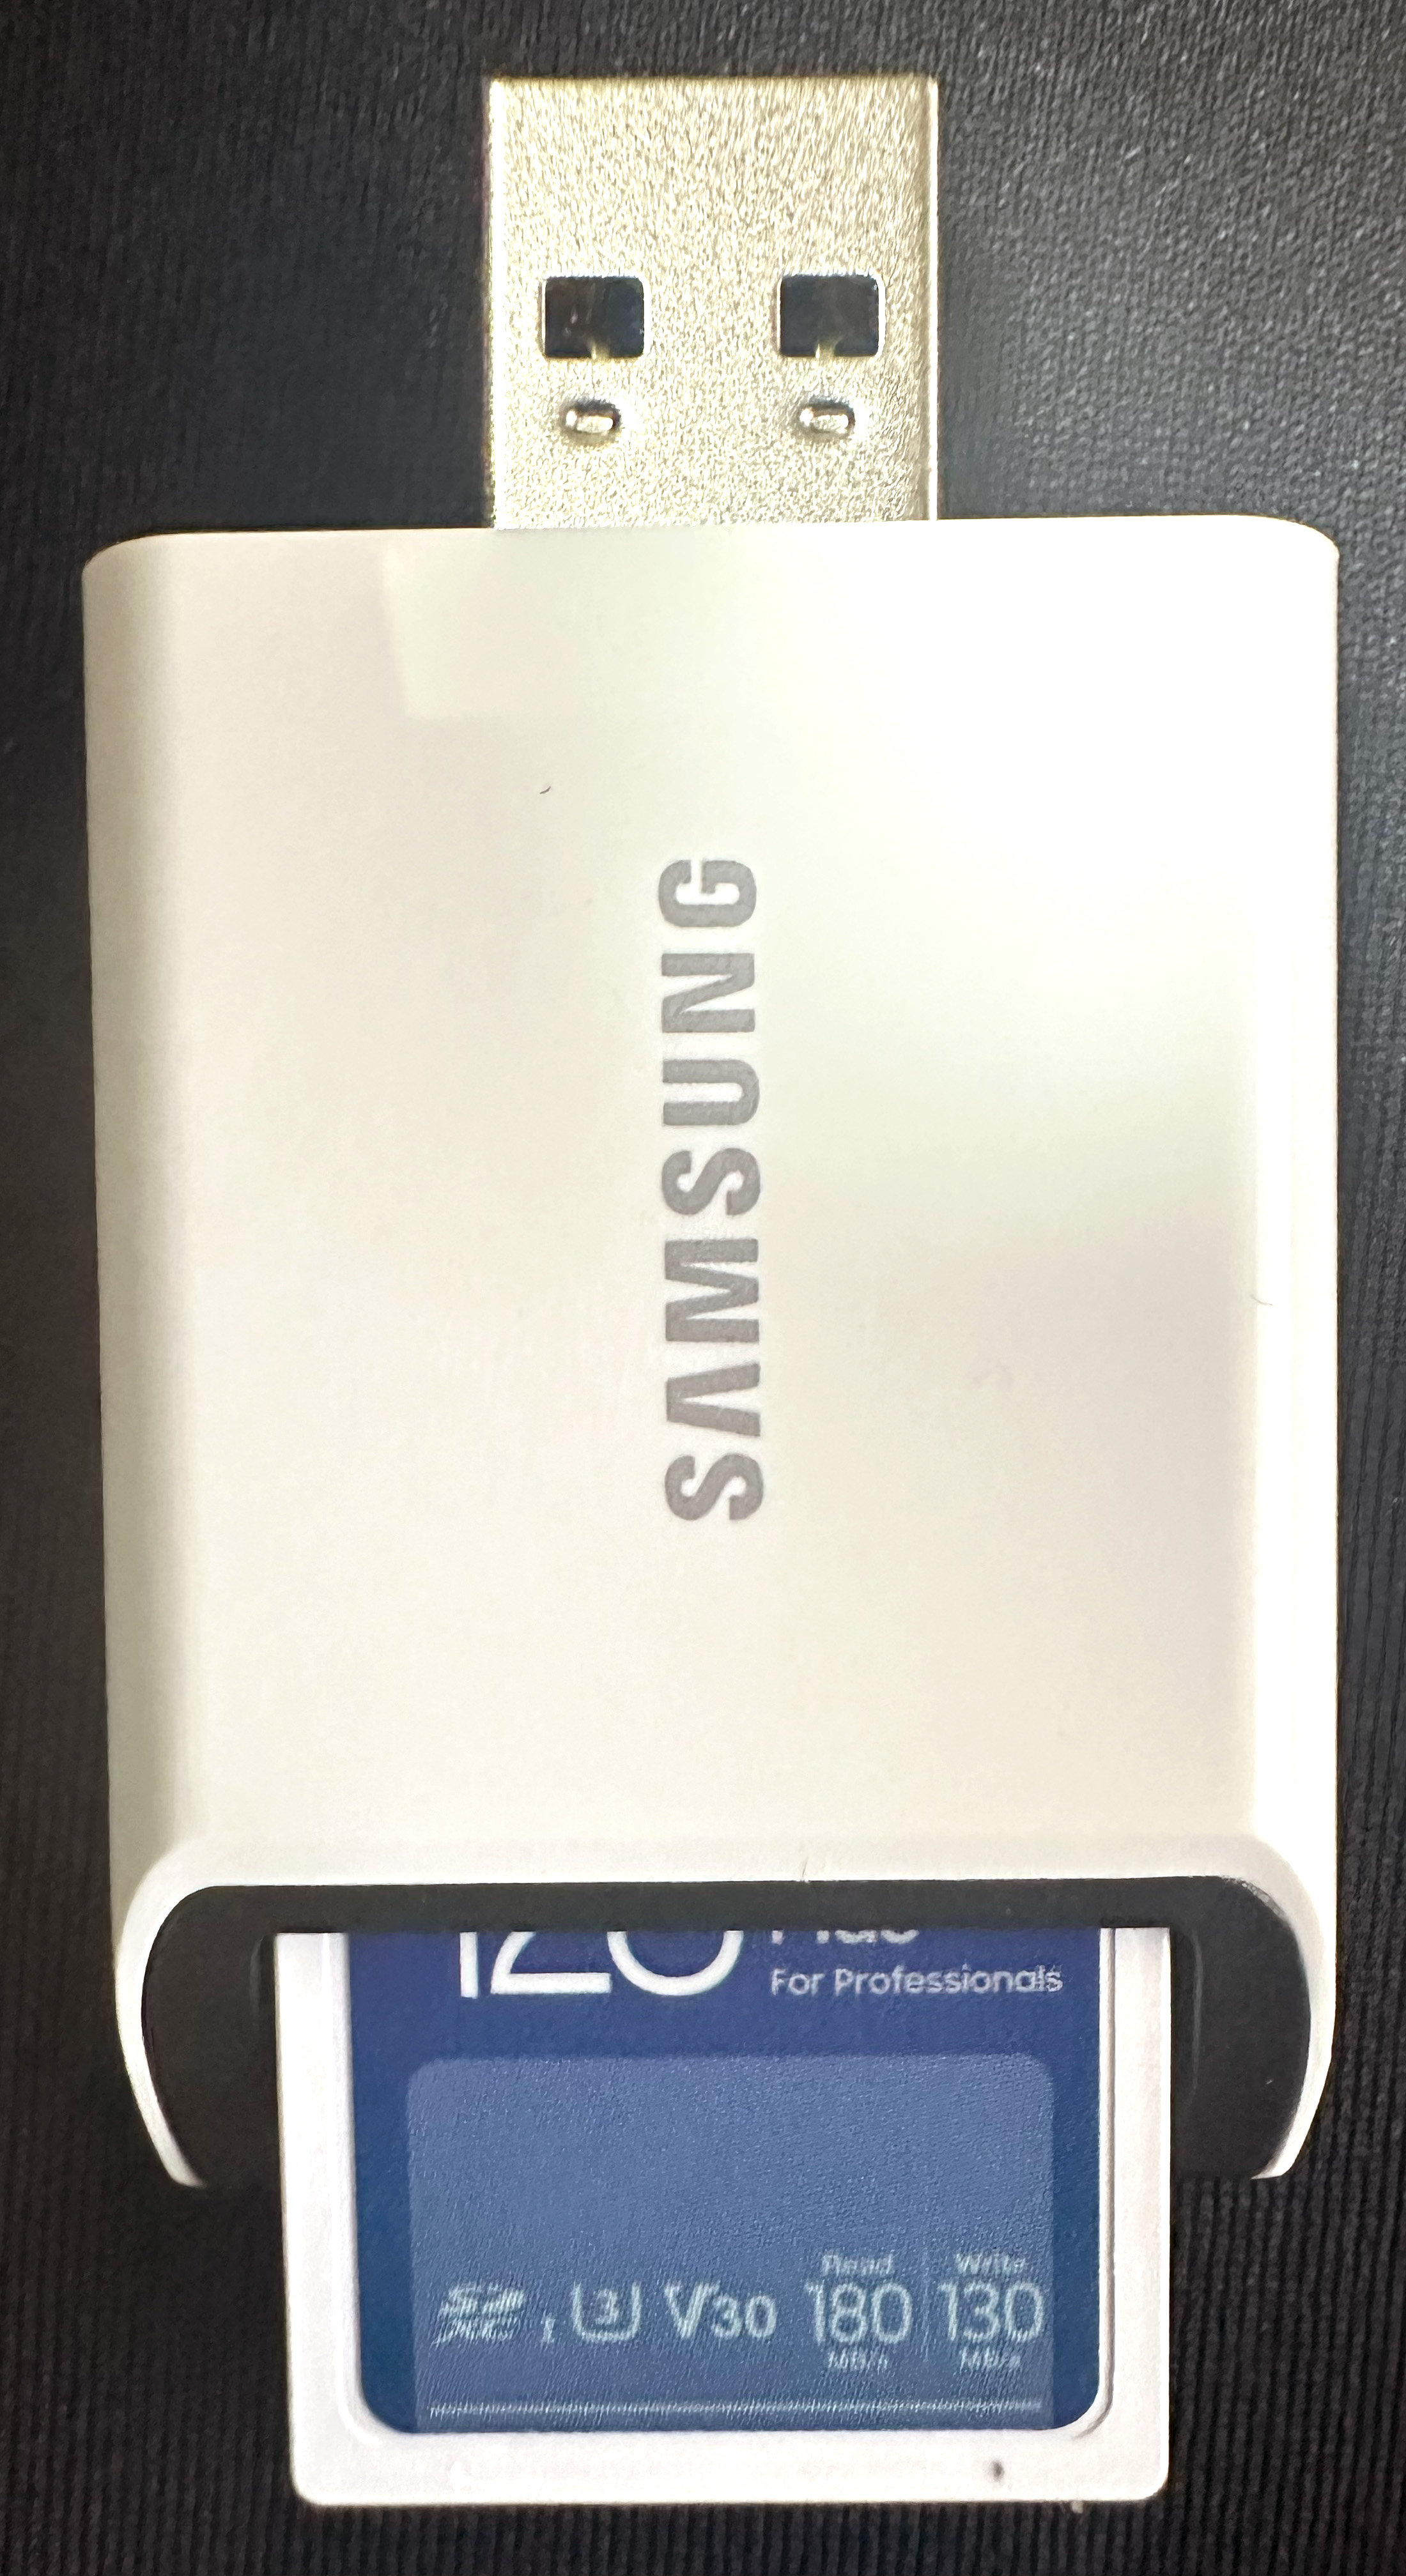 Samsung USB 3.0 SD Reader (US-TG1AA03) with SD Card